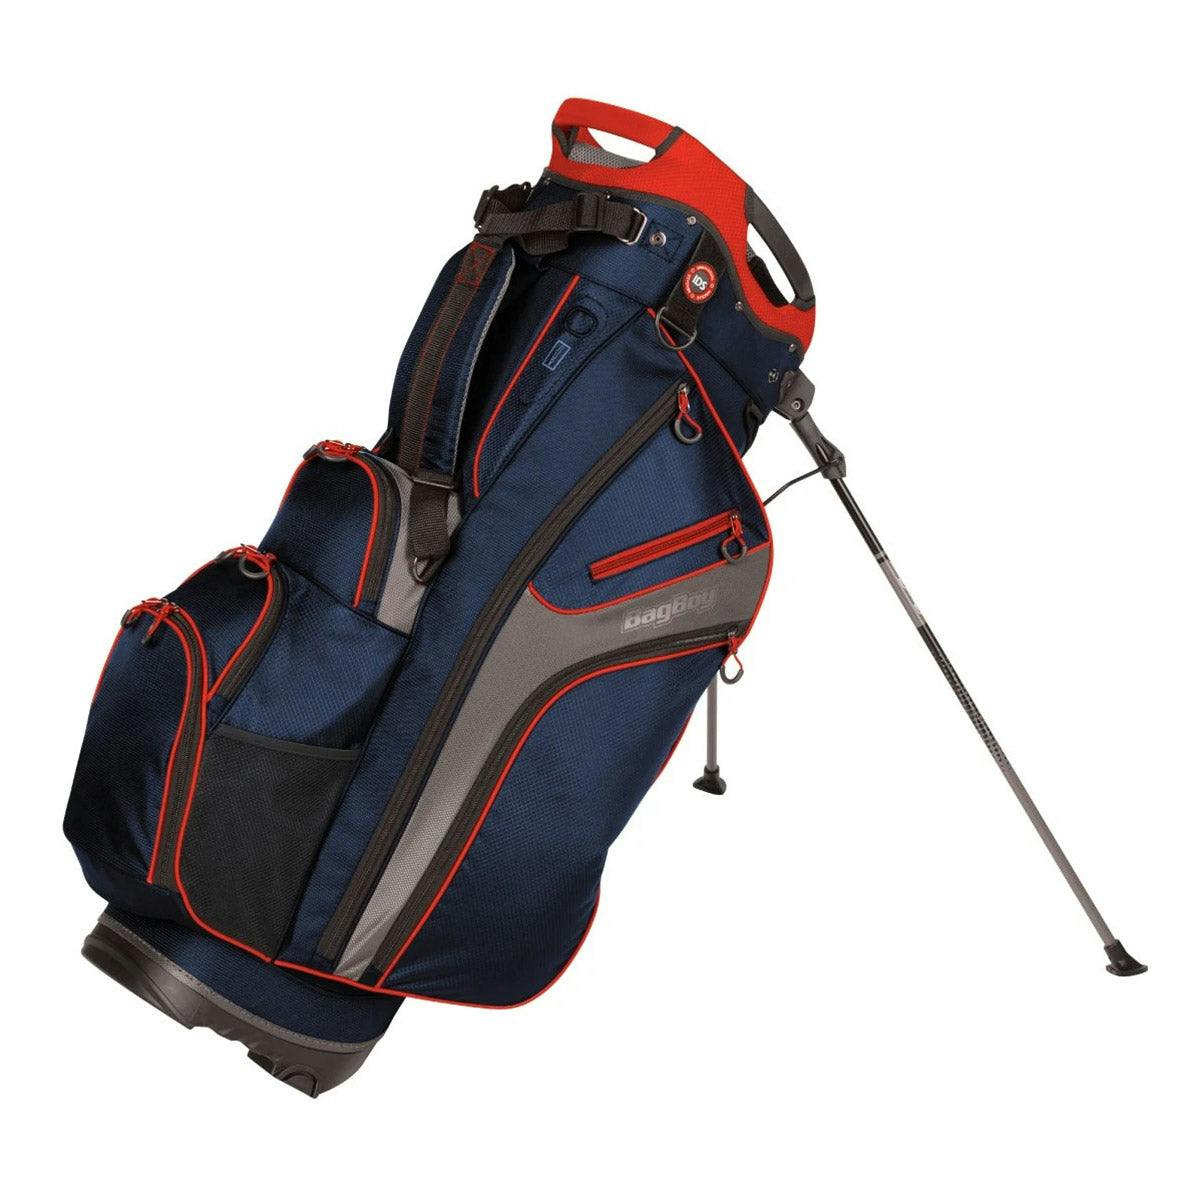 Bag Boy Chiller Hybrid Golf Stand Bag · White/Charcoal/Red